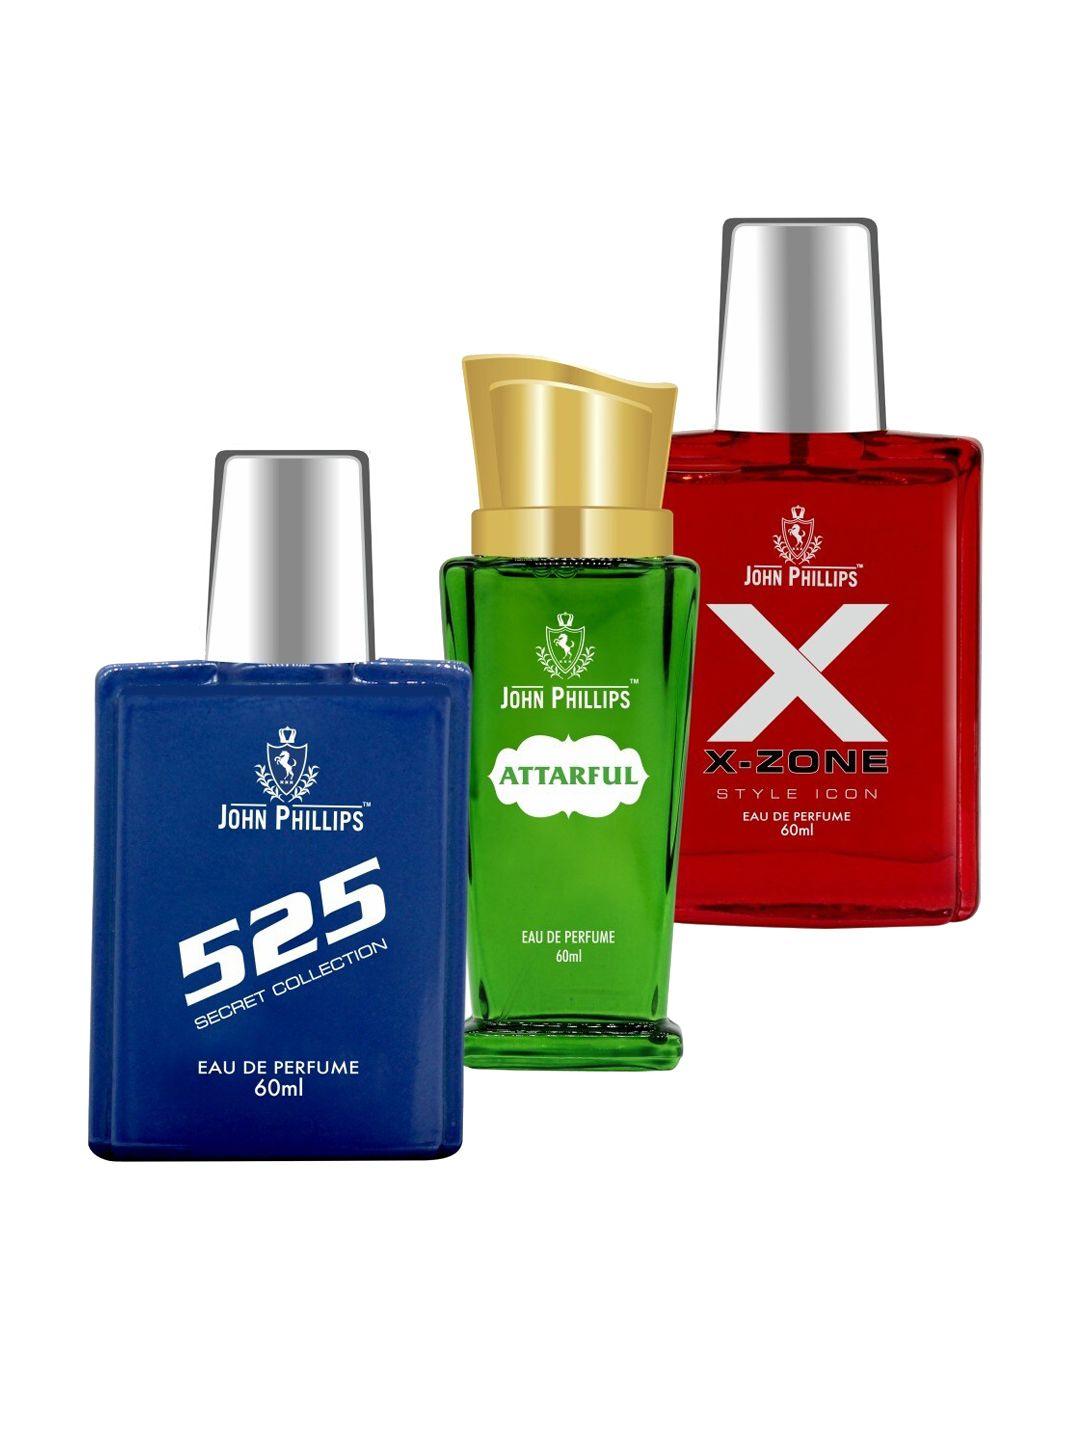 john phillips set of 3 eau de parfum - 525 + xx-zone style icon + attarful - 60ml each